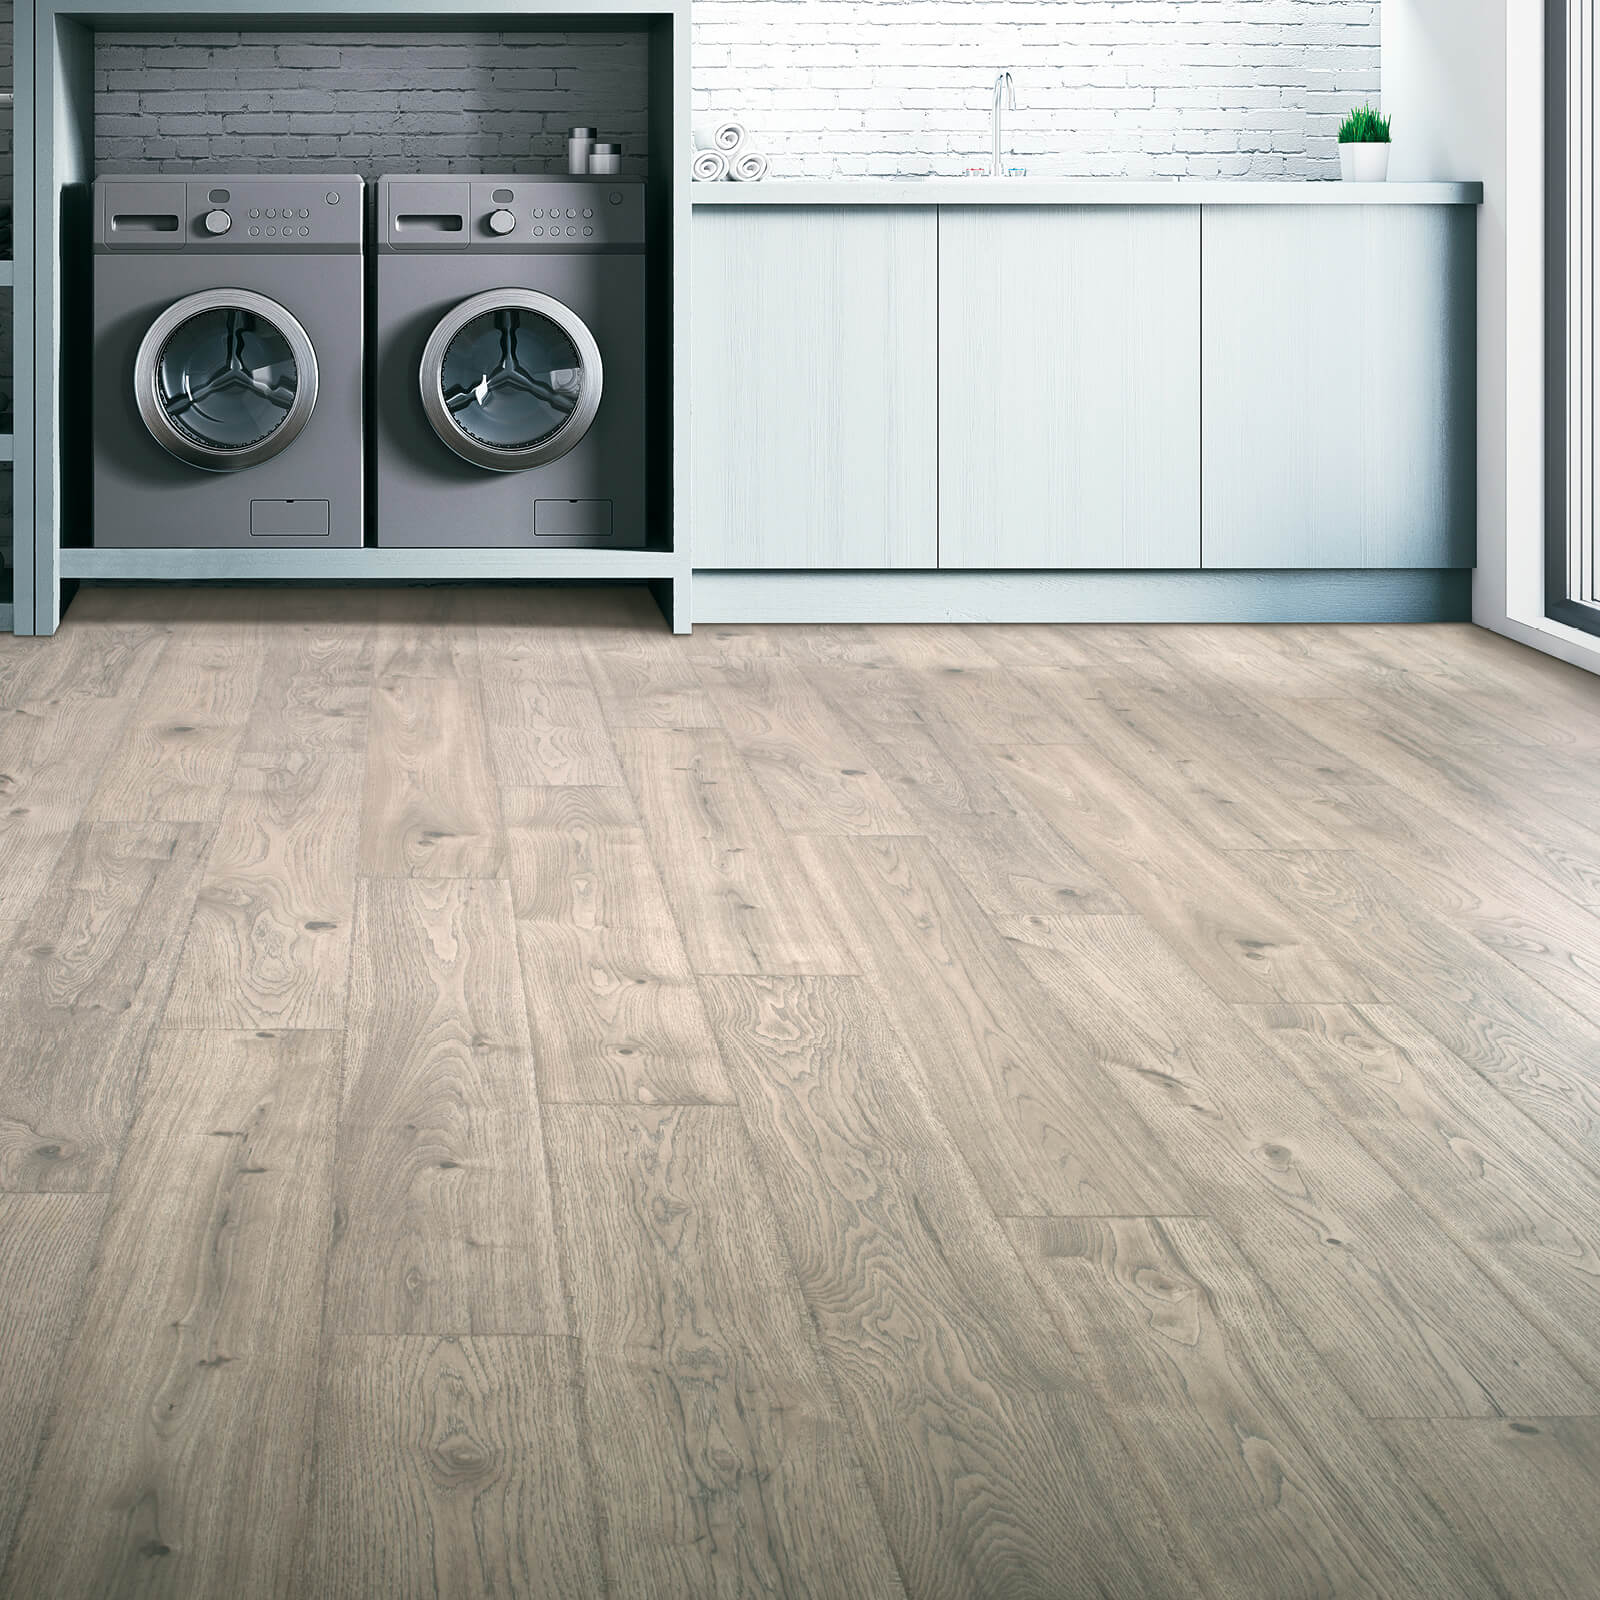 Laundry room Laminate flooring | CarpetsPlus COLORTILE of Hutchinson